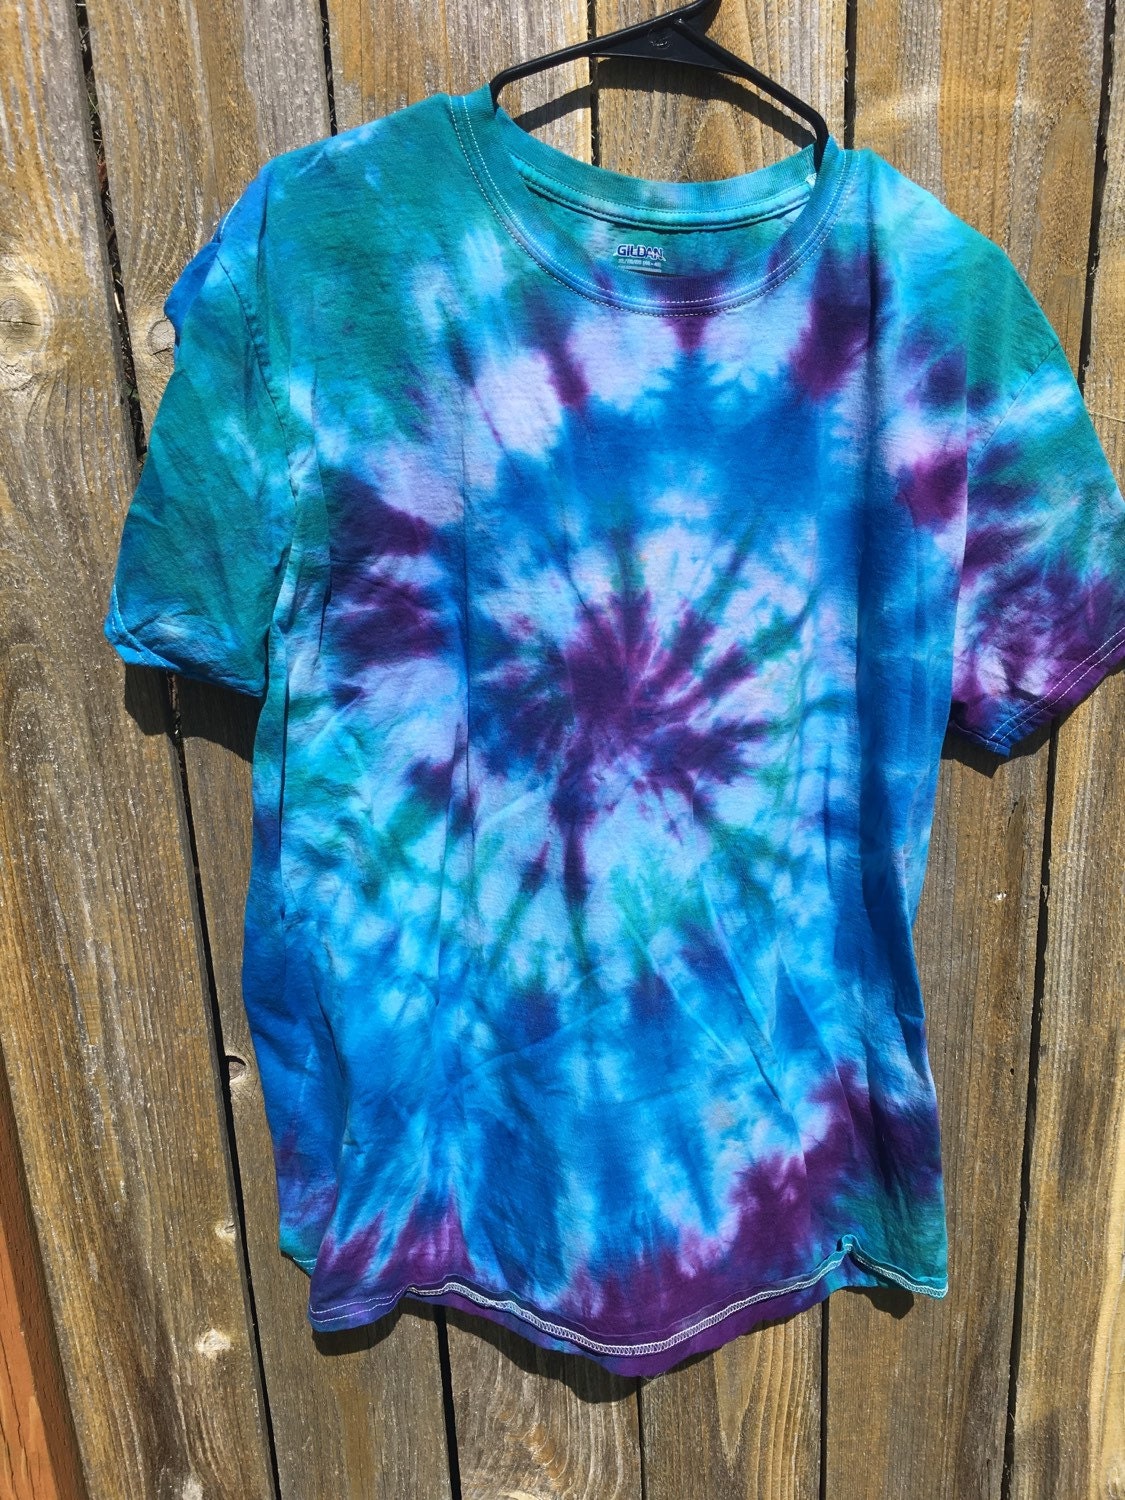 Purple Blue and Teal Tie Dye Swirl T-Shirt by TyeDyeChyld on Etsy